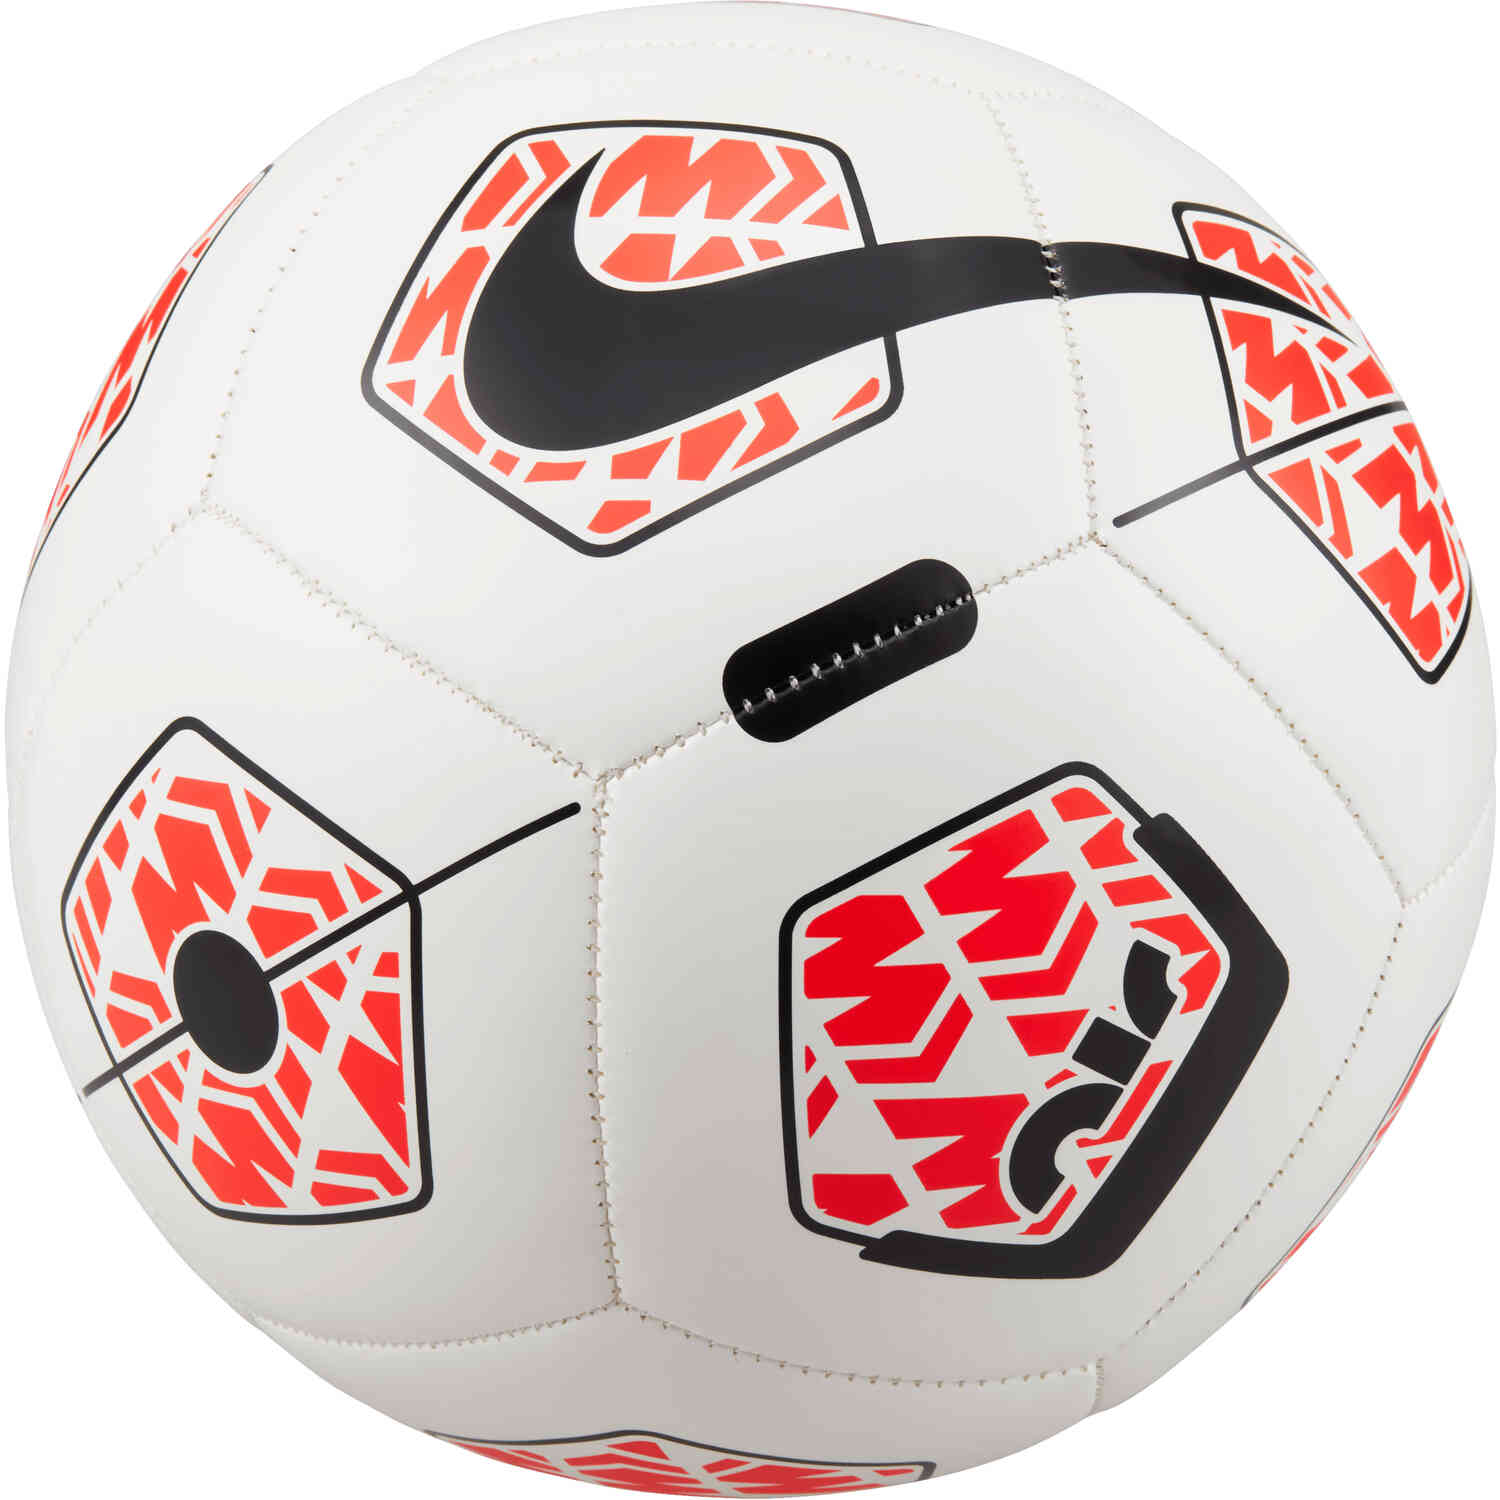 Nike Premier League Mercurial Fade Soccer Ball – White & Bright Crimson with Black